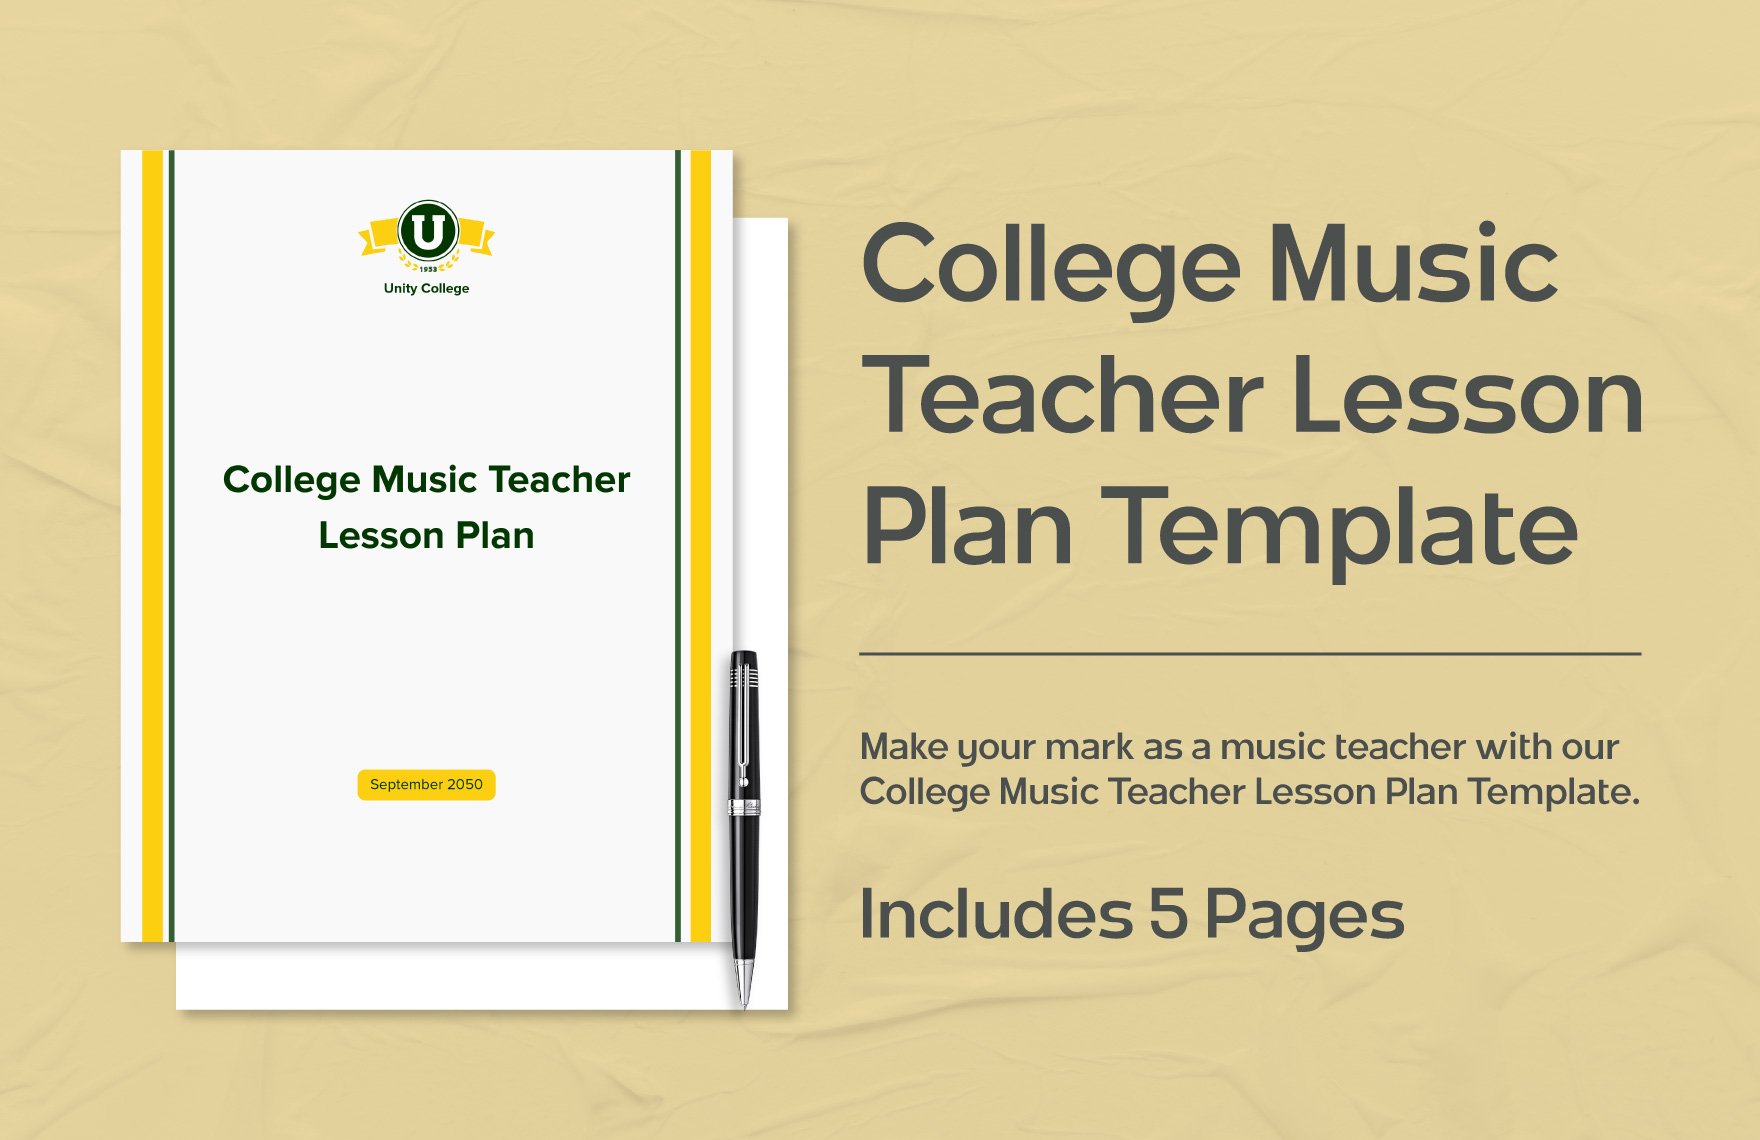 College Music Teacher Lesson Plan Template